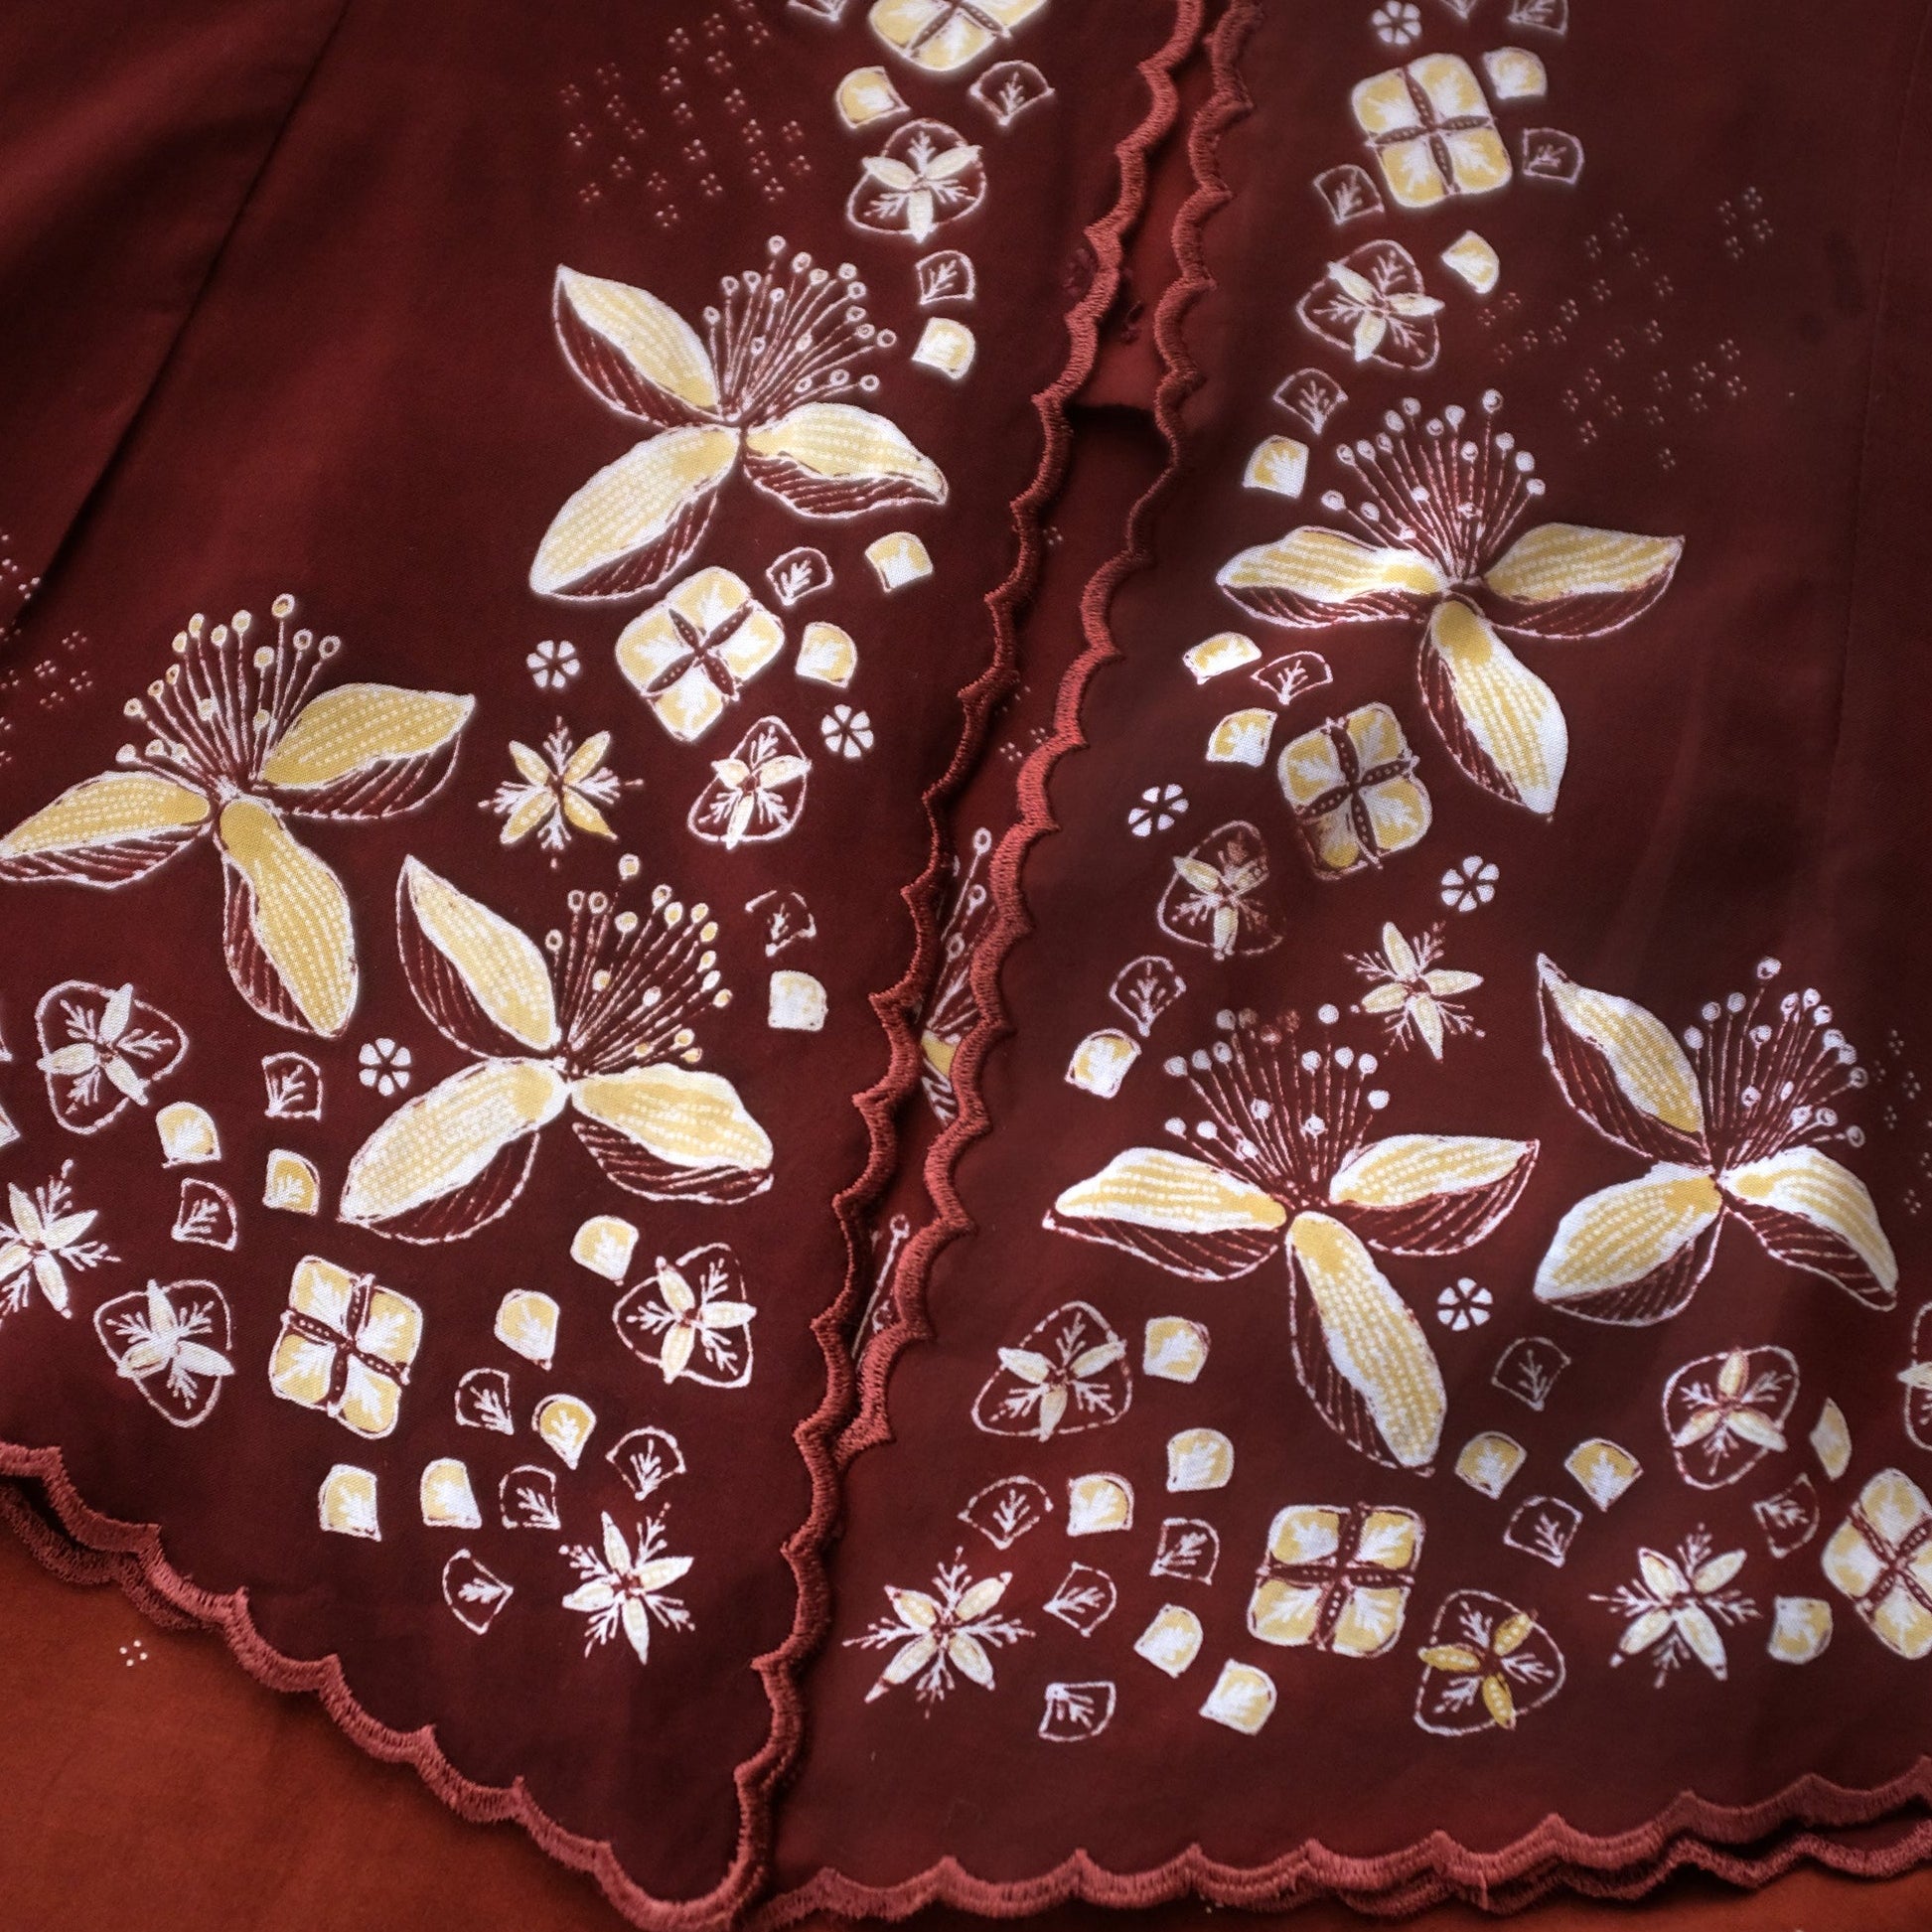 details, batik, embroidery, handmade, handcrafted